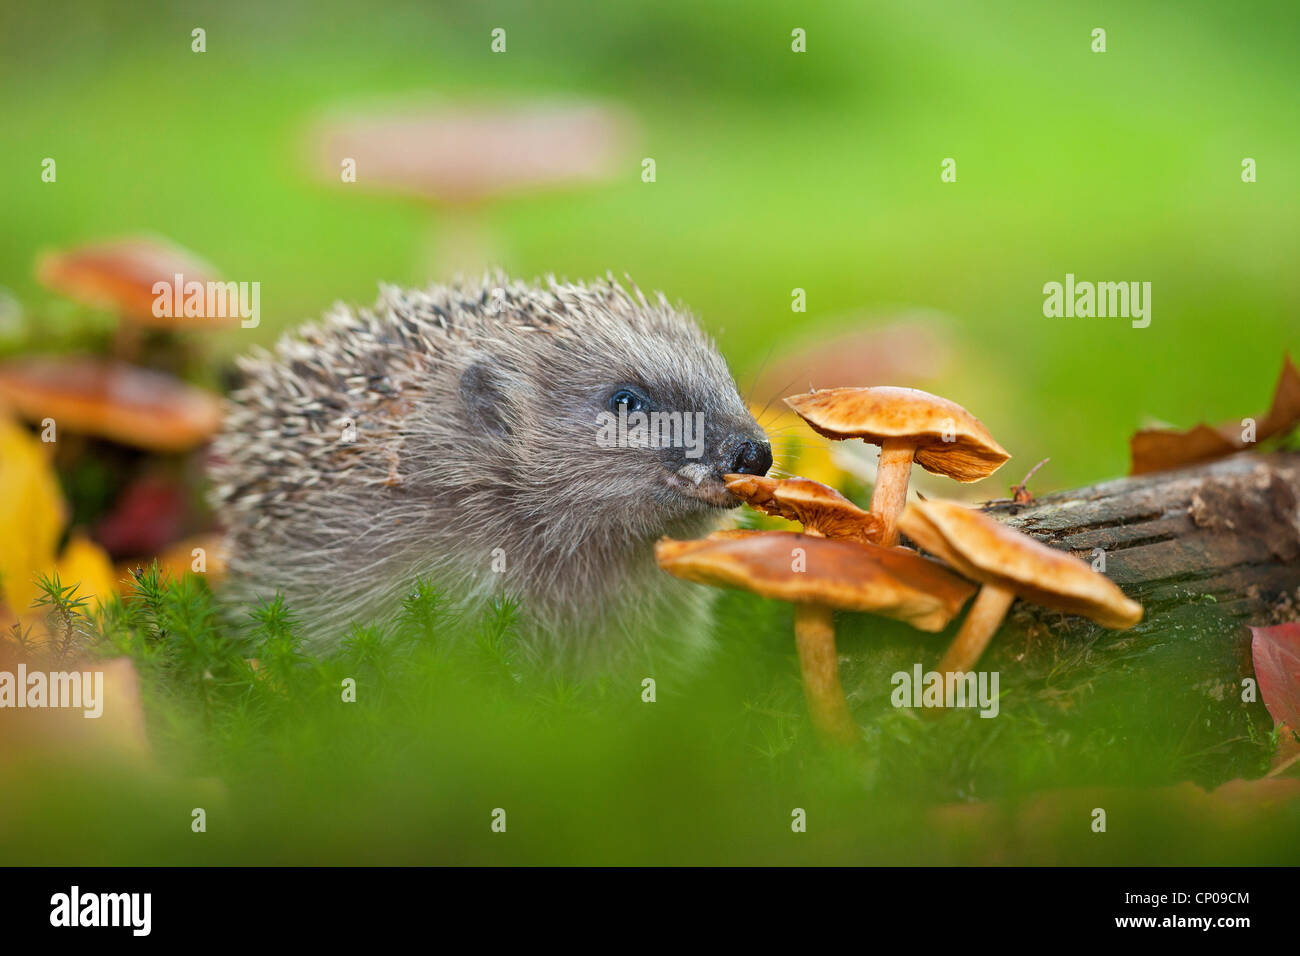 Western hedgehog, European hedgehog (Erinaceus europaeus), eating a mushroom, Germany, Rhineland-Palatinate Stock Photo